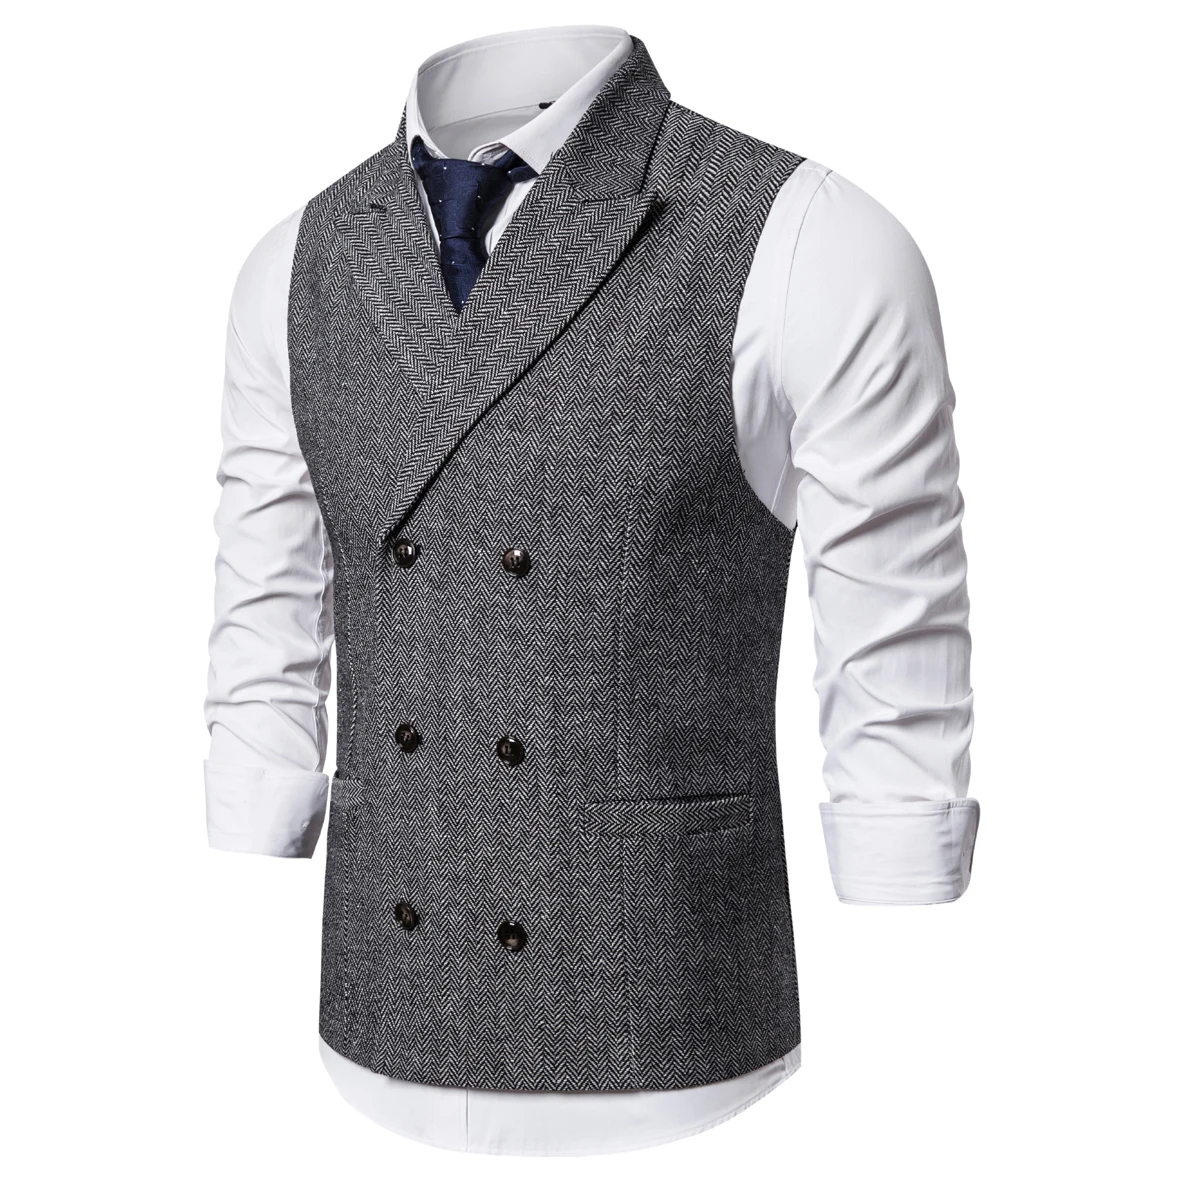 Brand Men's Waistcoat Fashion Retro Tweed Vests Classic Sleeveless Plaid Suit Vest British Style Double Breasted Gilet